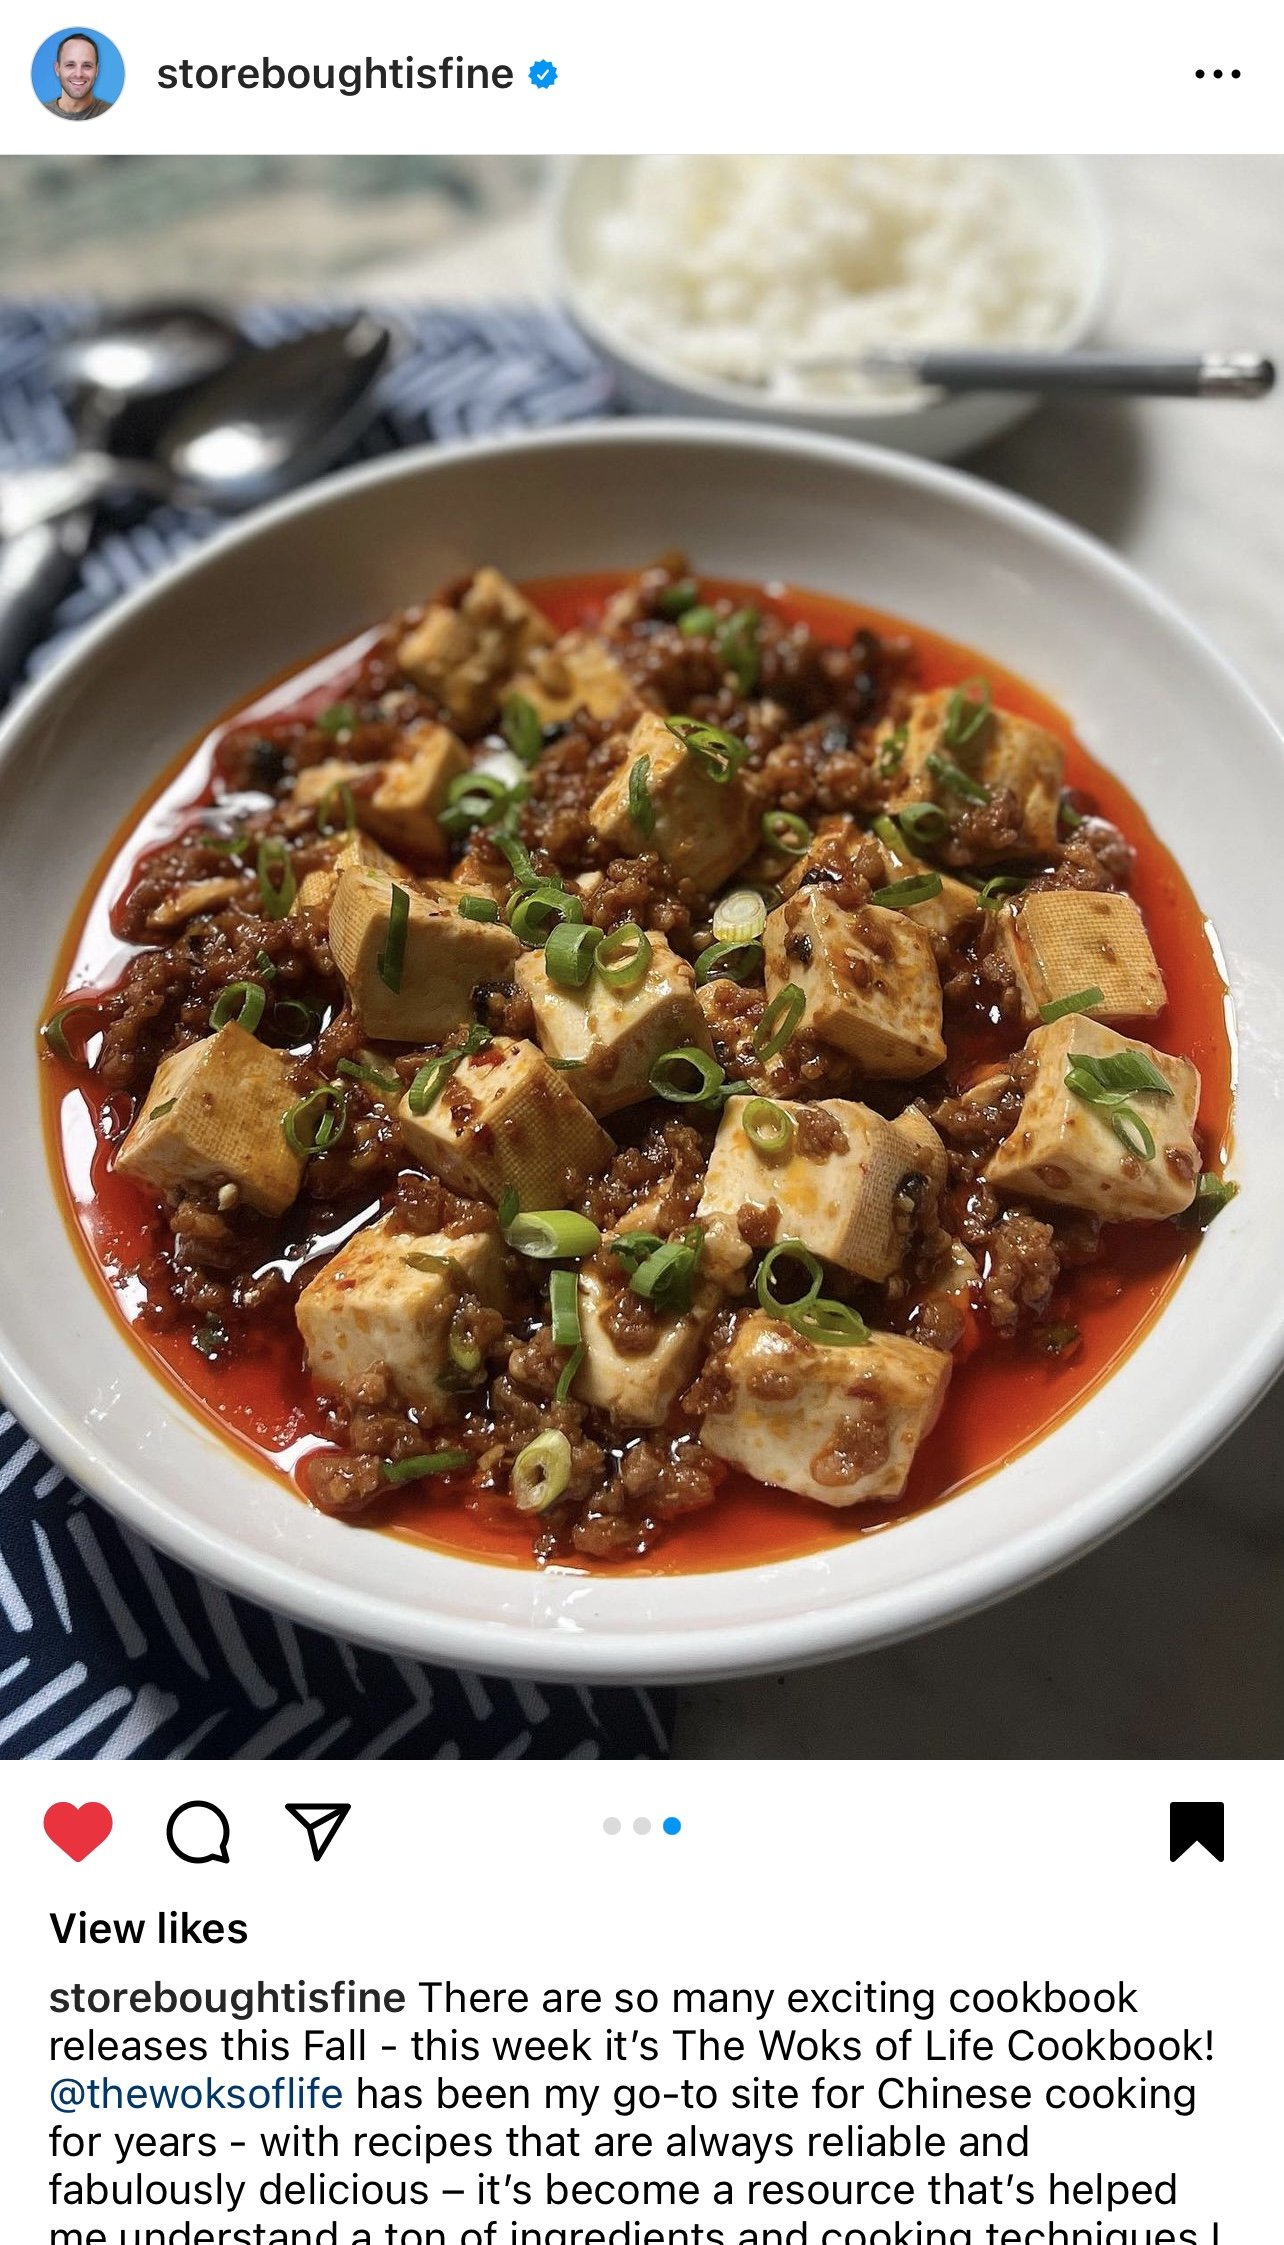 Storeboughtisfine instagram image of The Woks of Life Cookbook mapo tofu